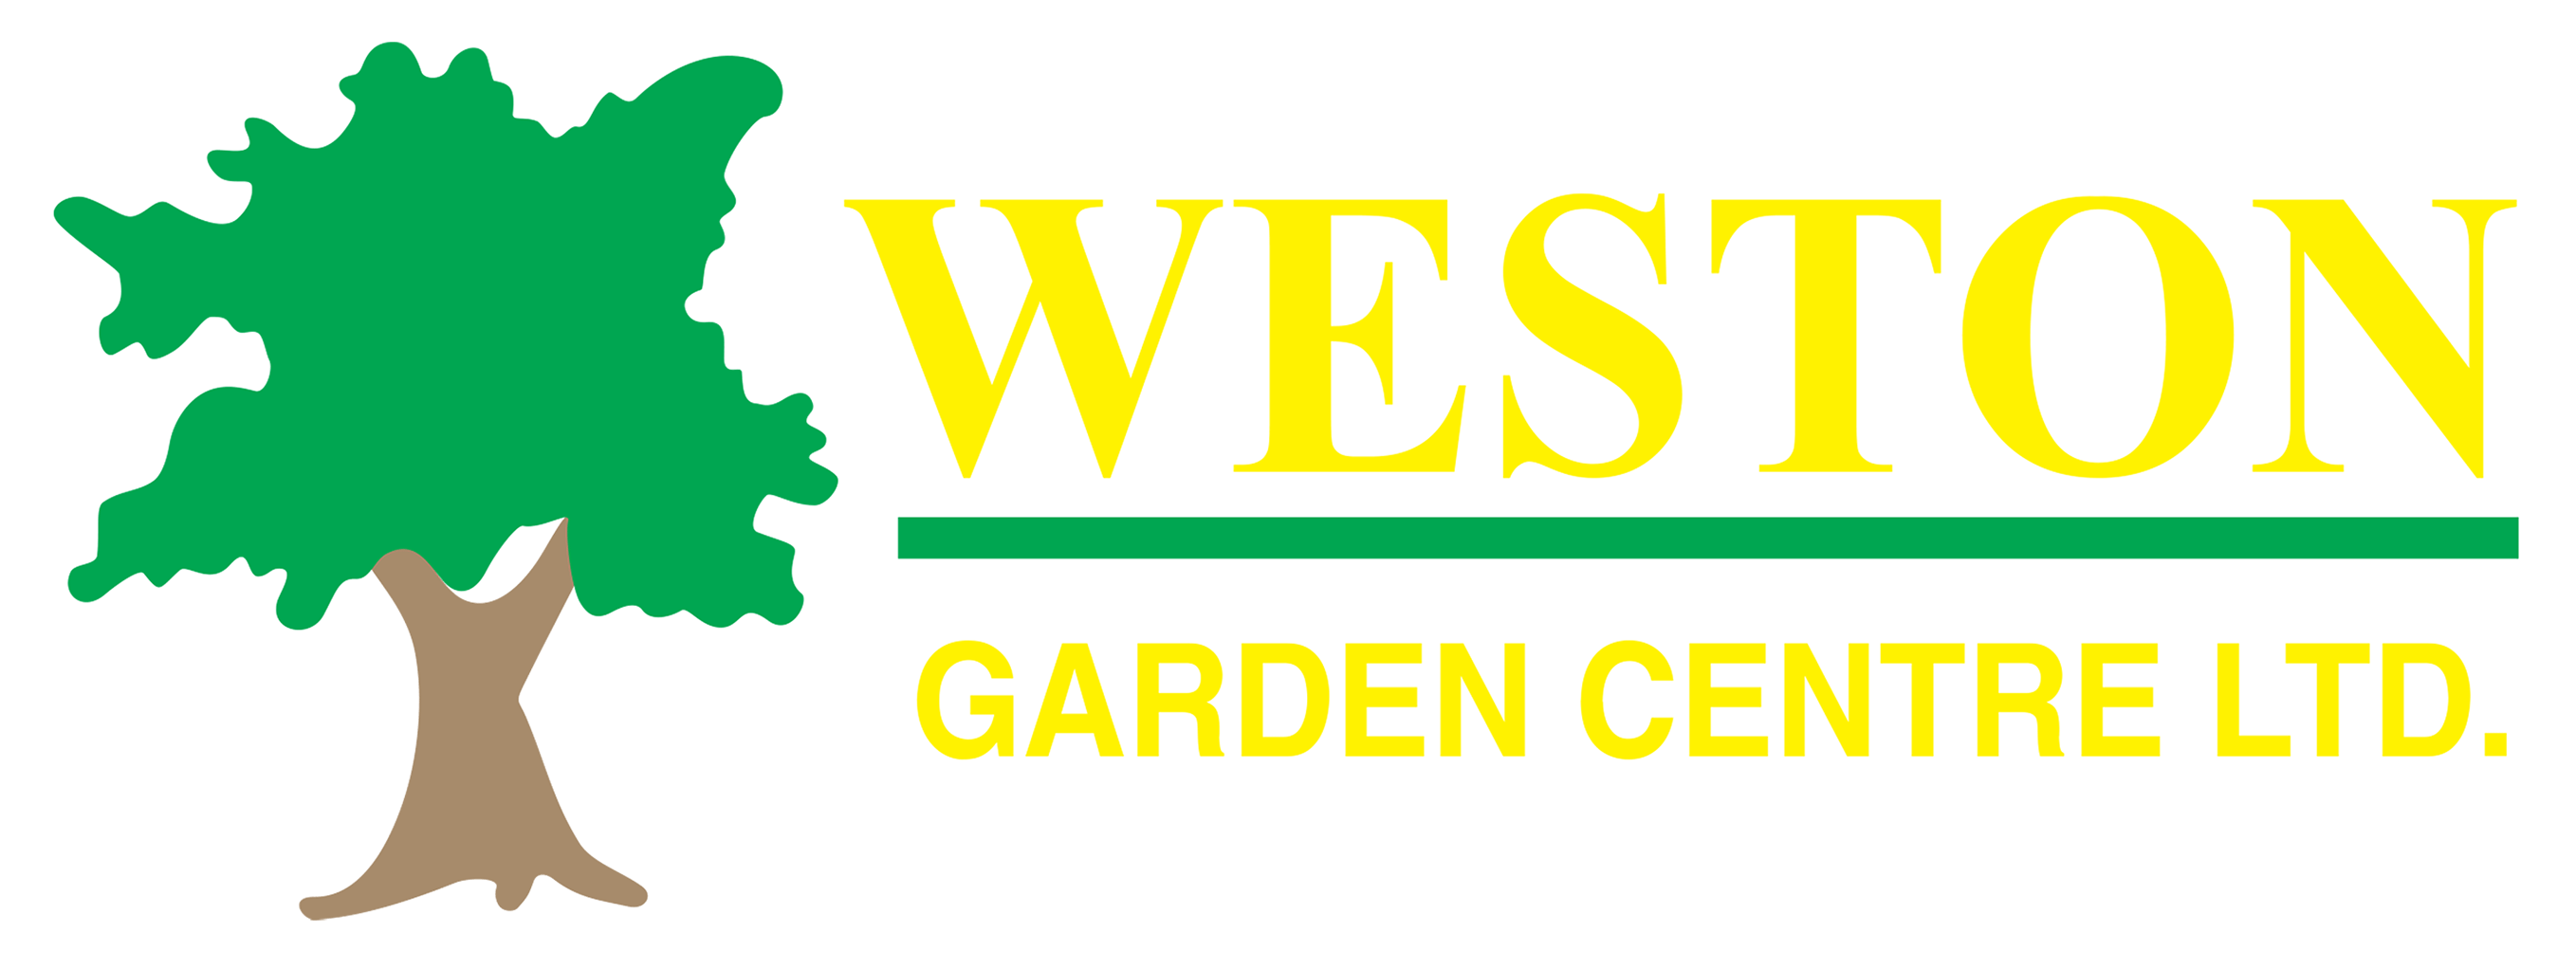 .Weston Garden Center